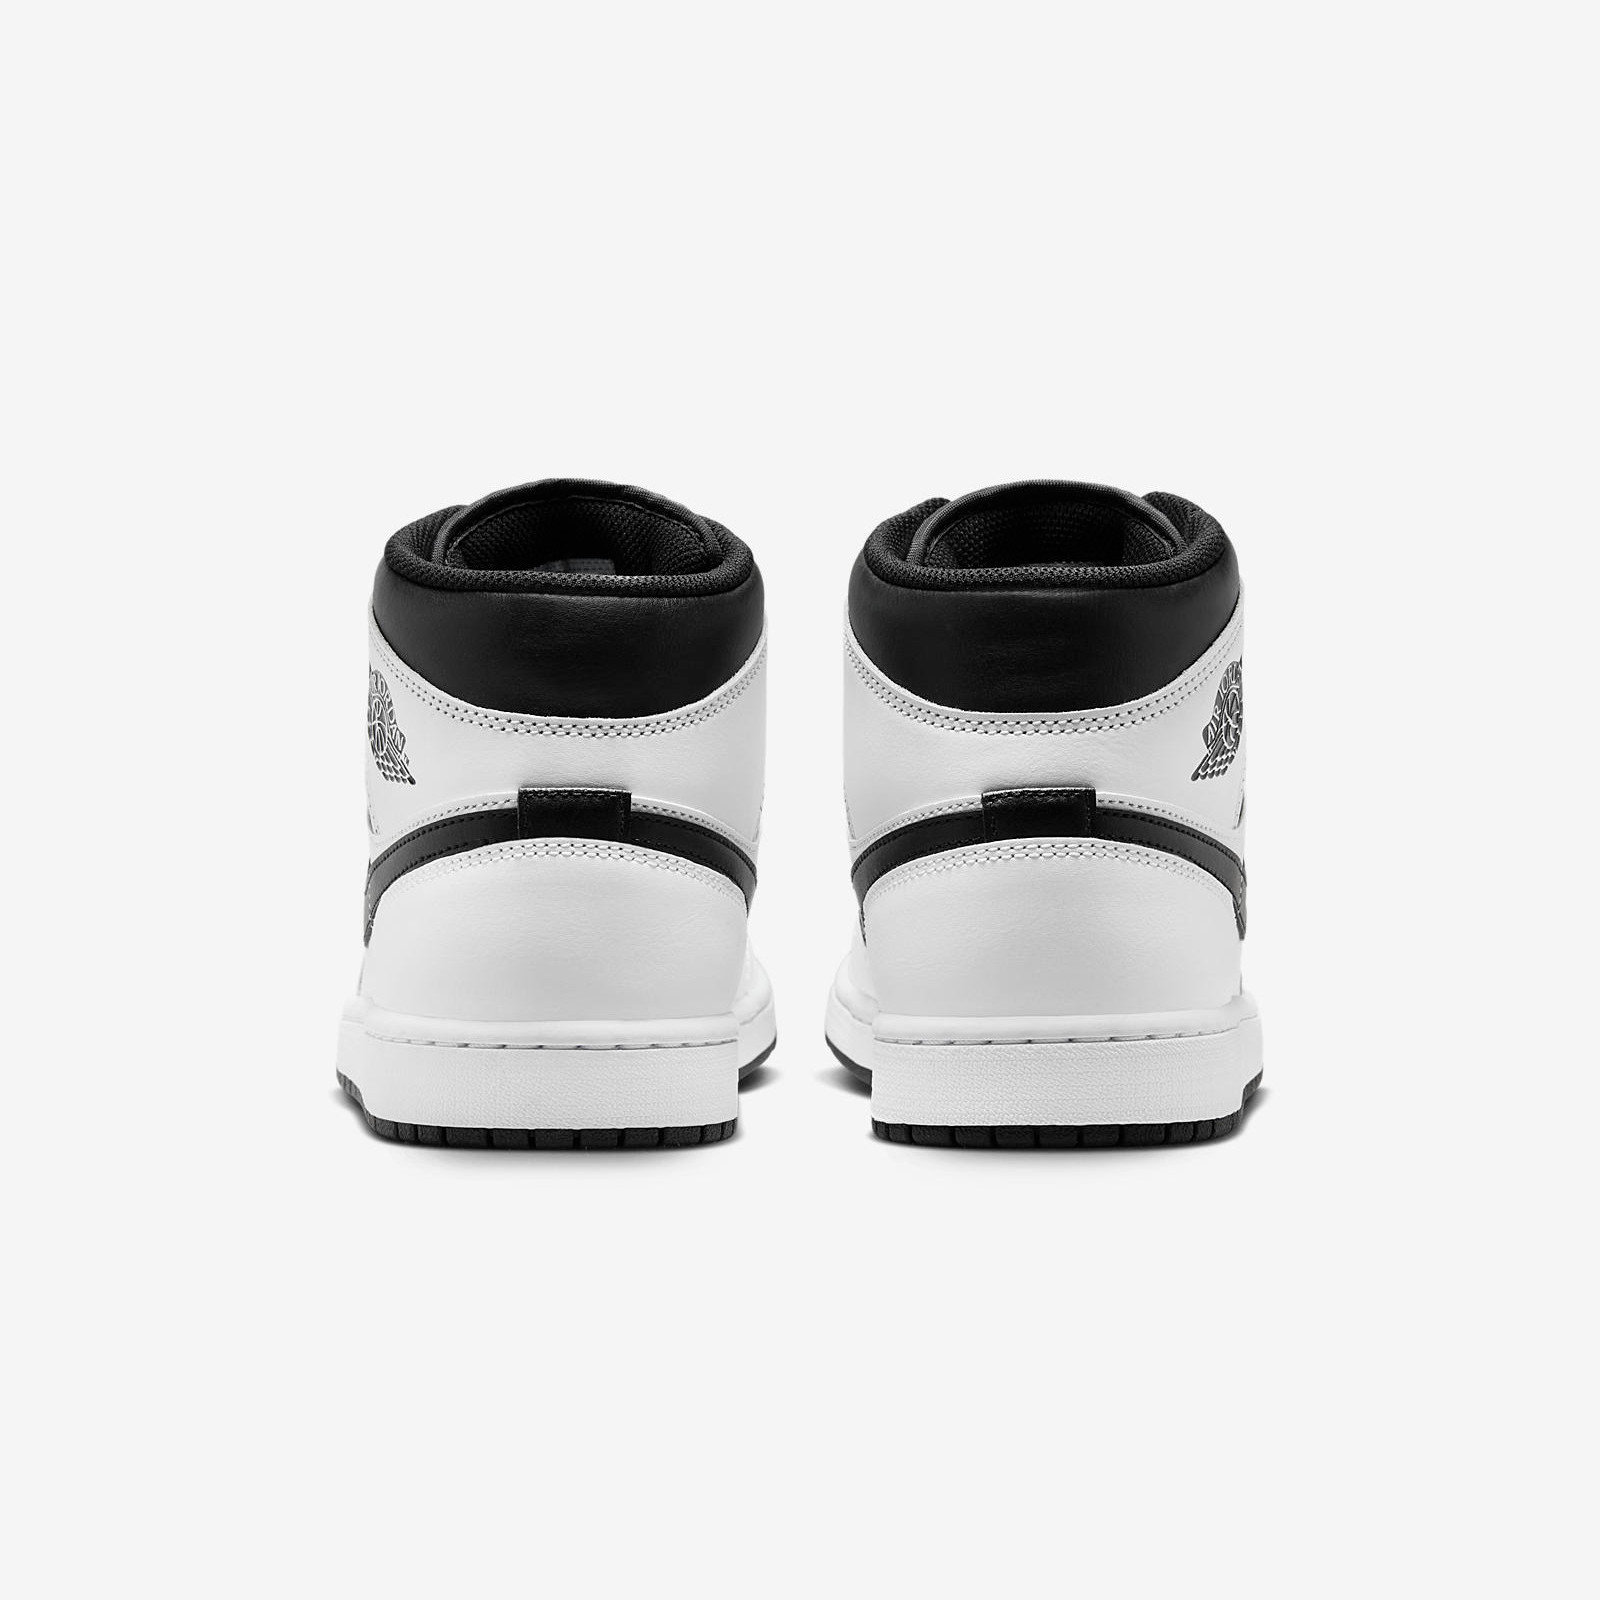 Air Jordan 1 Mid
White / Black